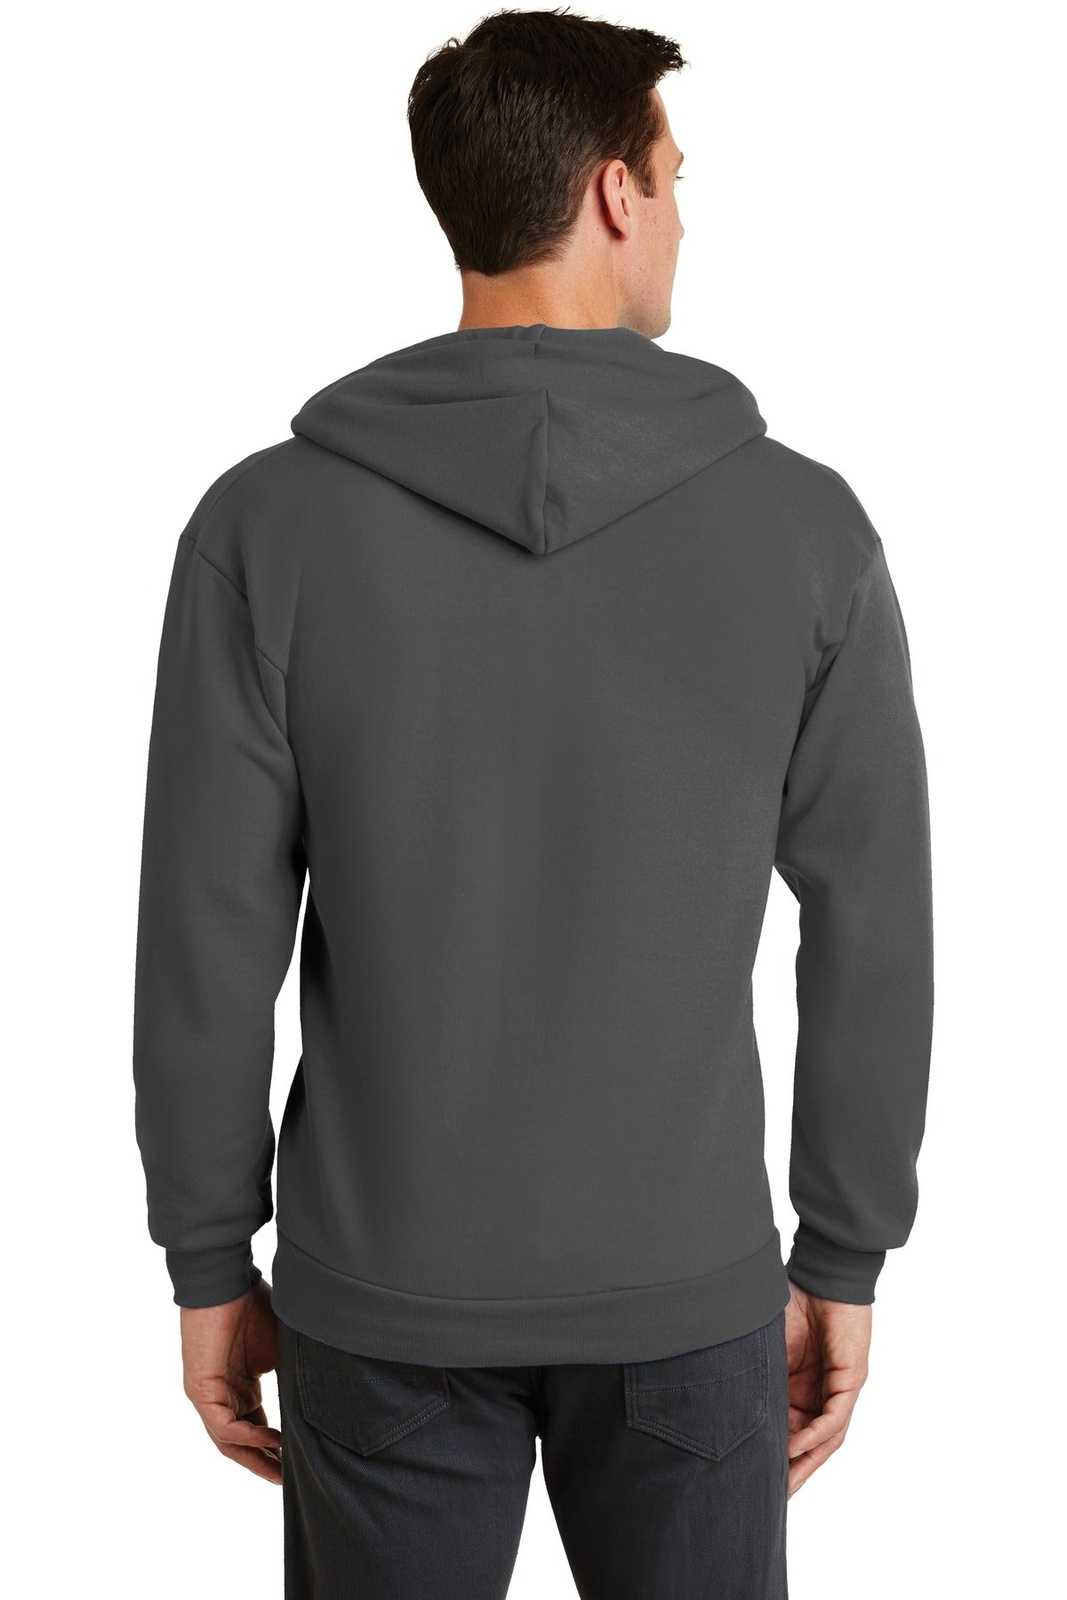 Port &amp; Company PC78ZH Core Fleece Full-Zip Hooded Sweatshirt - Charcoal - HIT a Double - 2